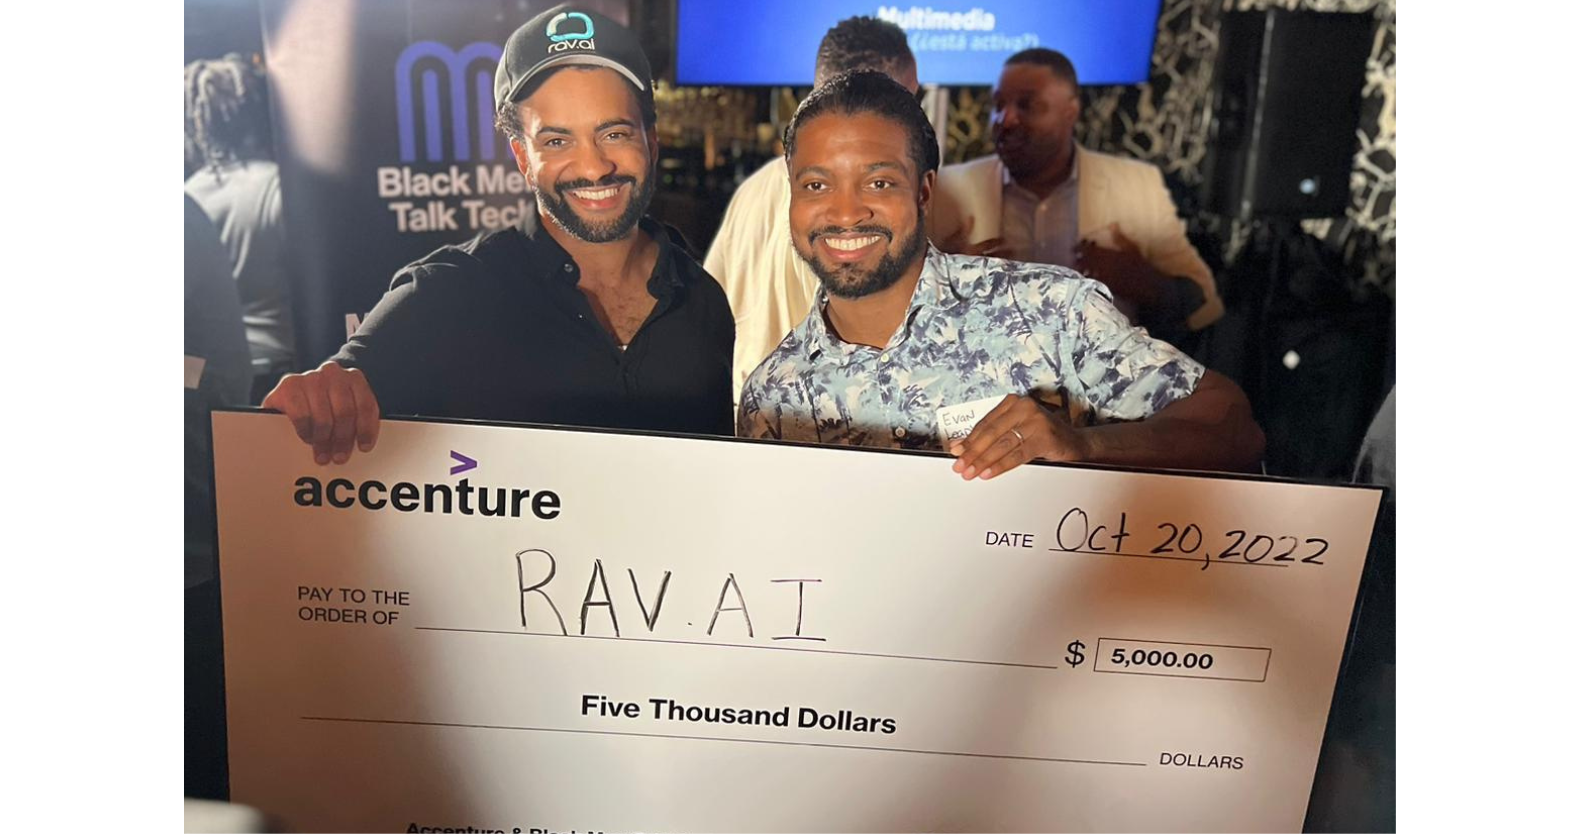 RAV.AI; Winner of the "Black Men Talk Tech 4th Annual SAAS Pitch Conference."